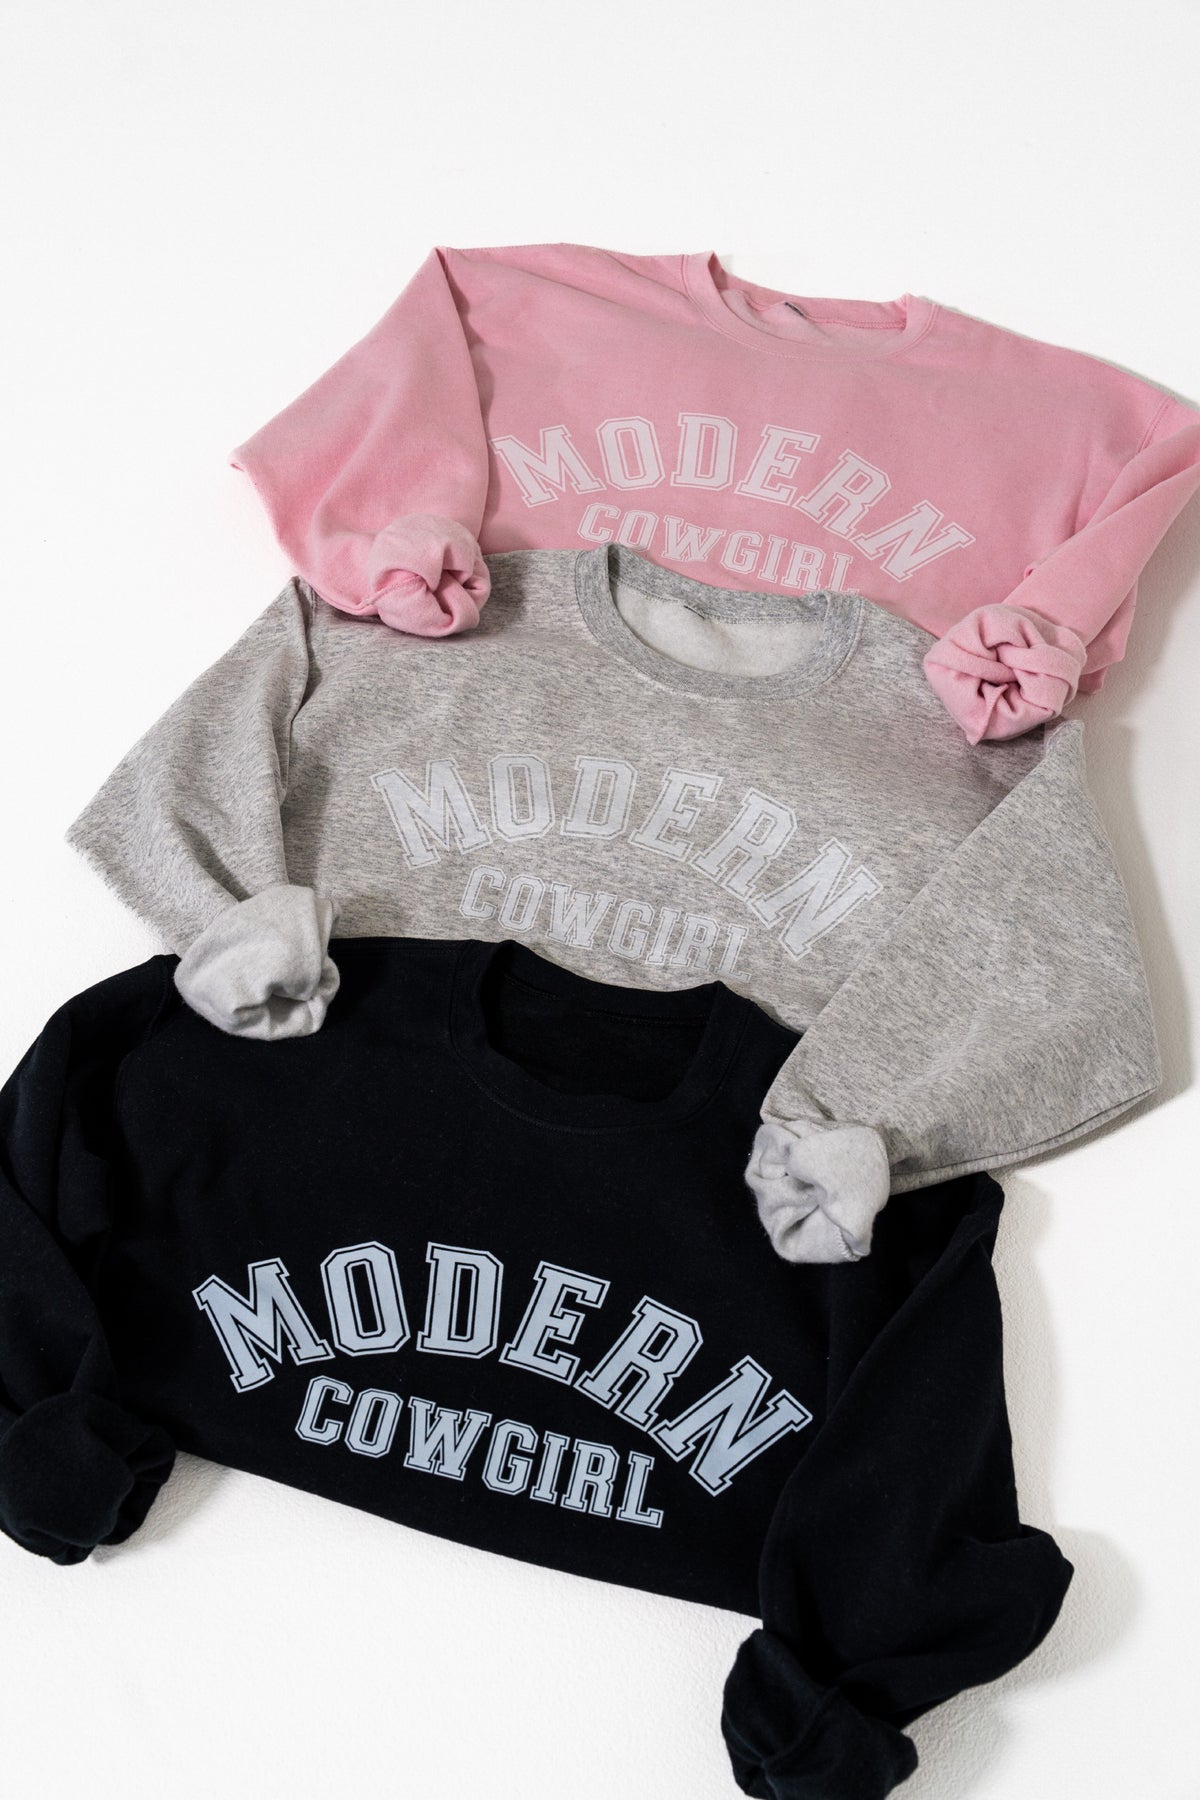 Modern Cowgirl Sweatshirt in Black